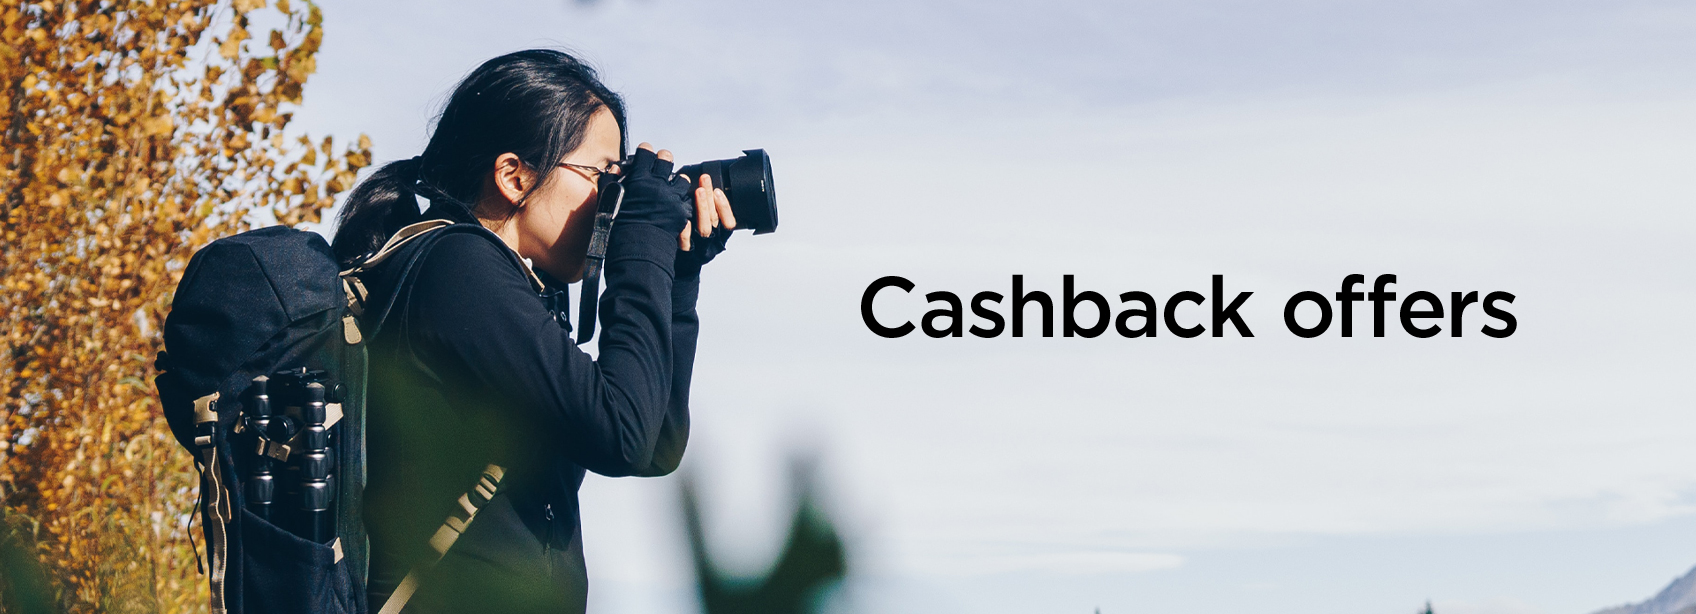 Cashback-Offers-generic-H-210623.jpg